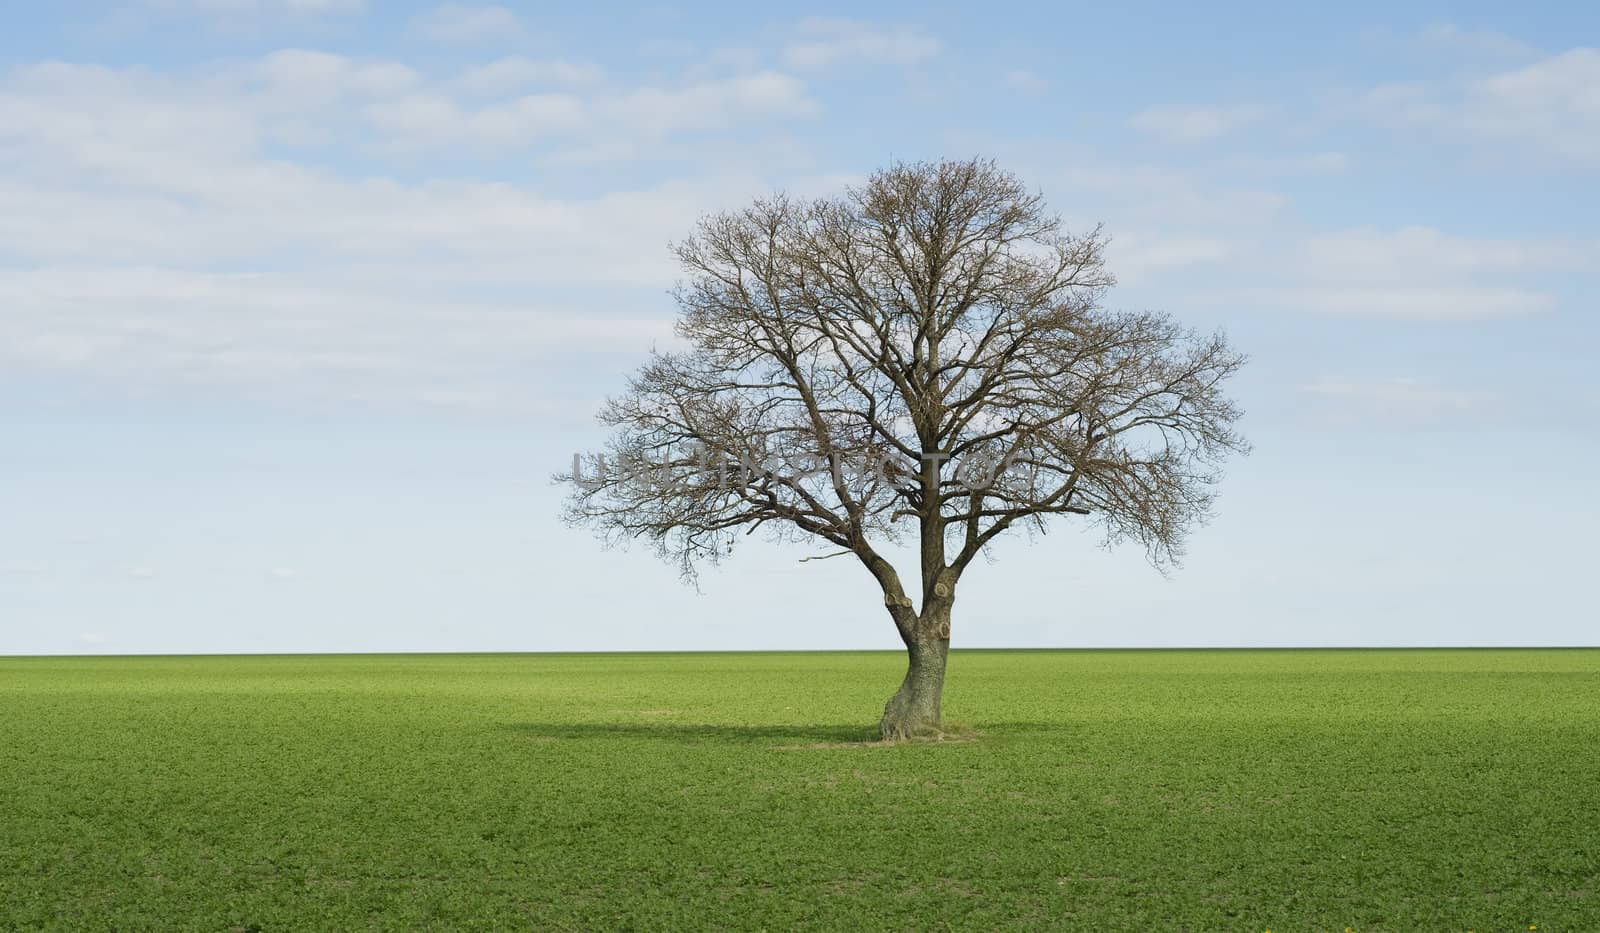 Lonley tree on perfect green field